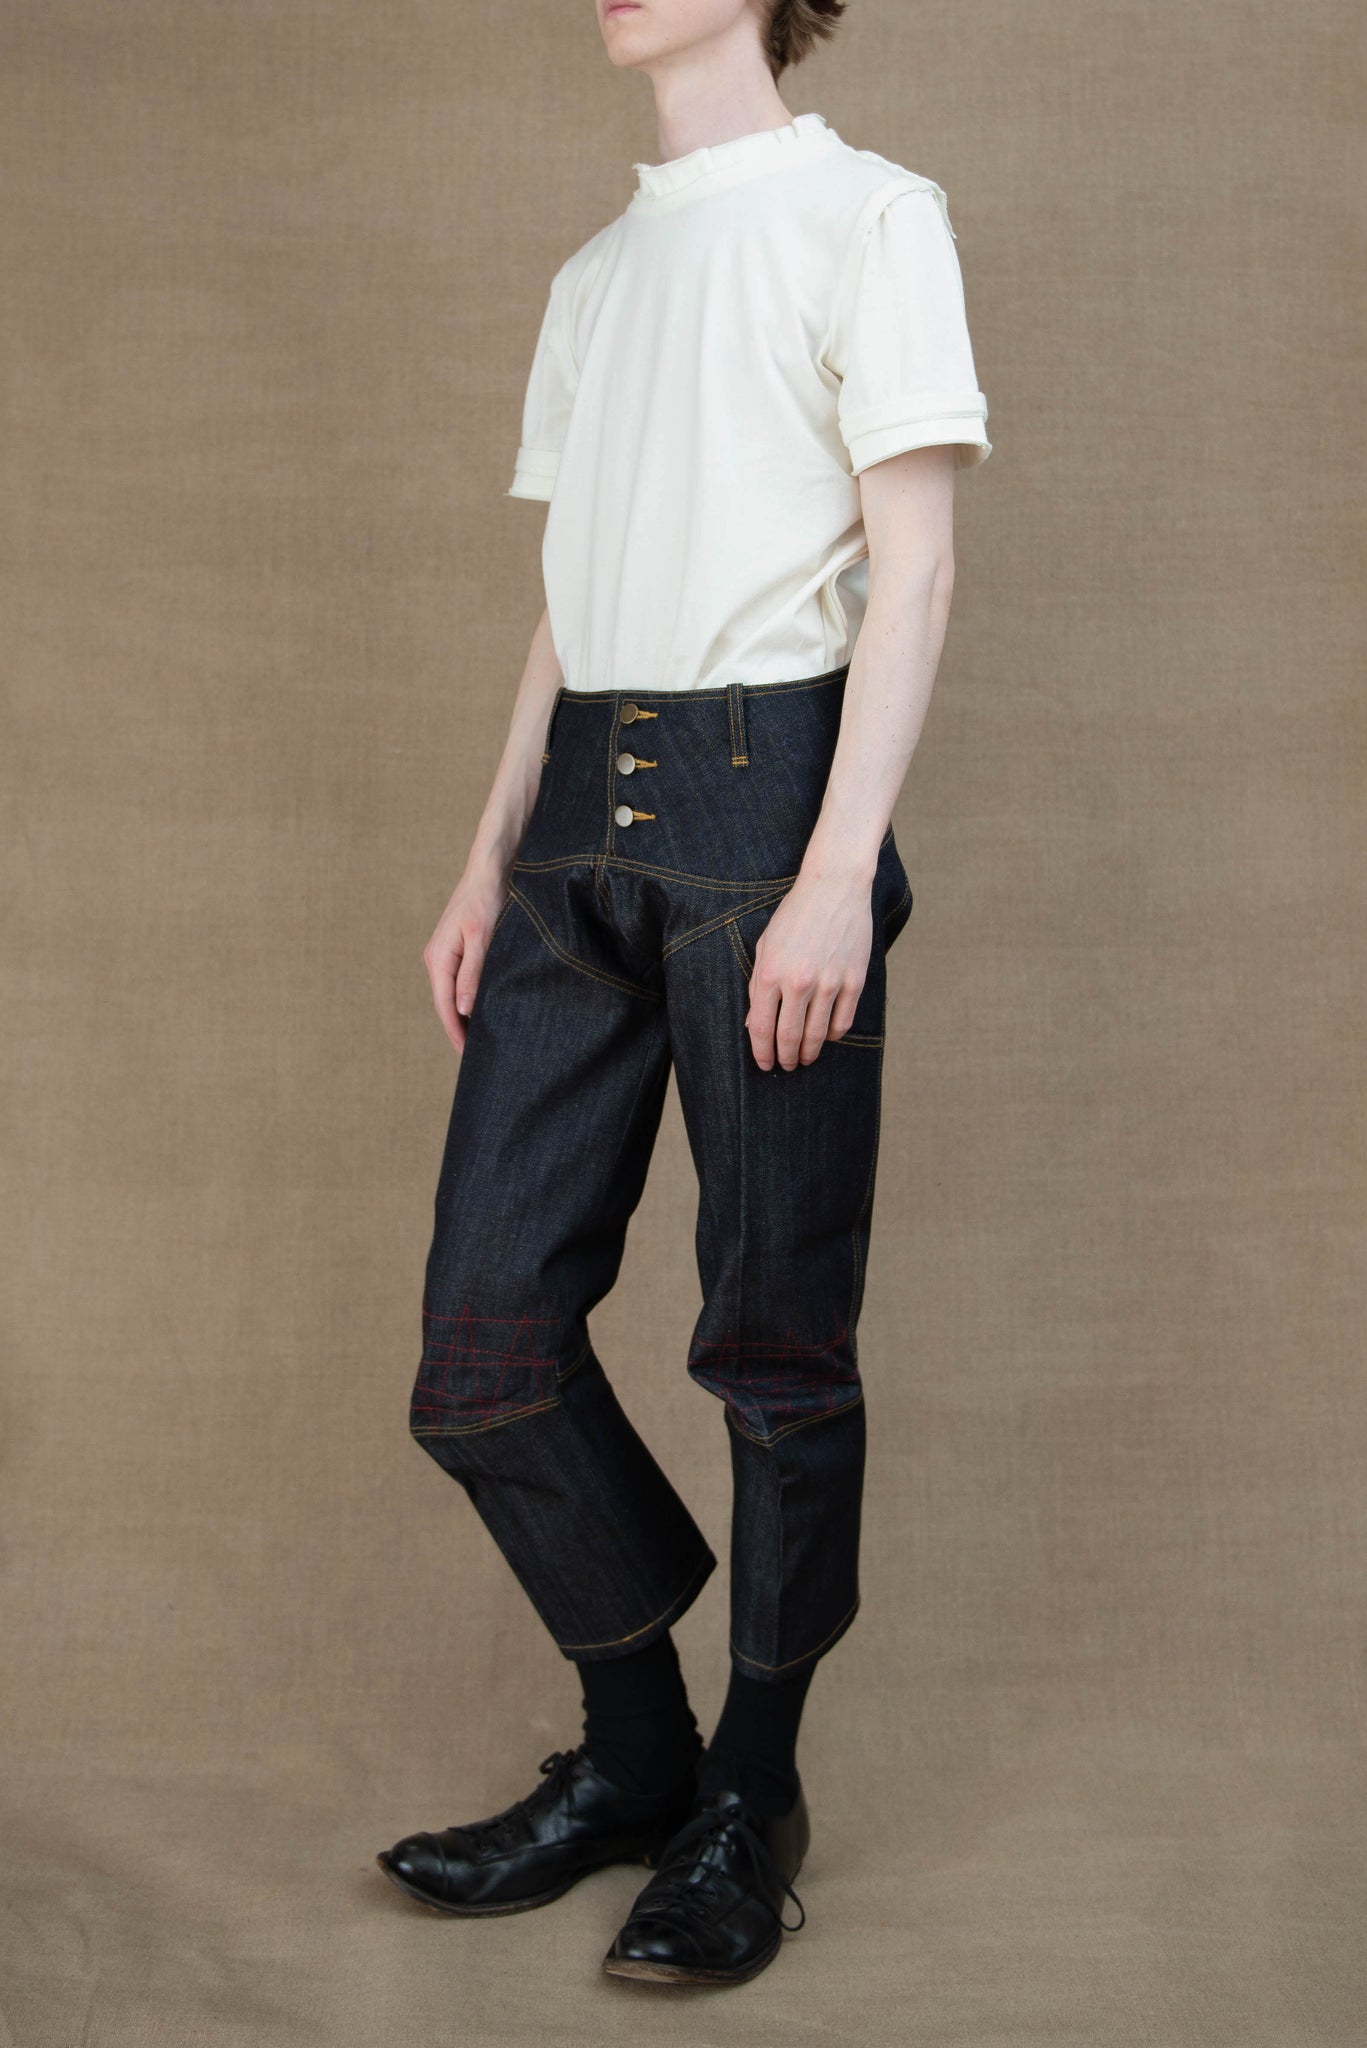 Trousers 2036- Cotton100% Denim- Red Stitch